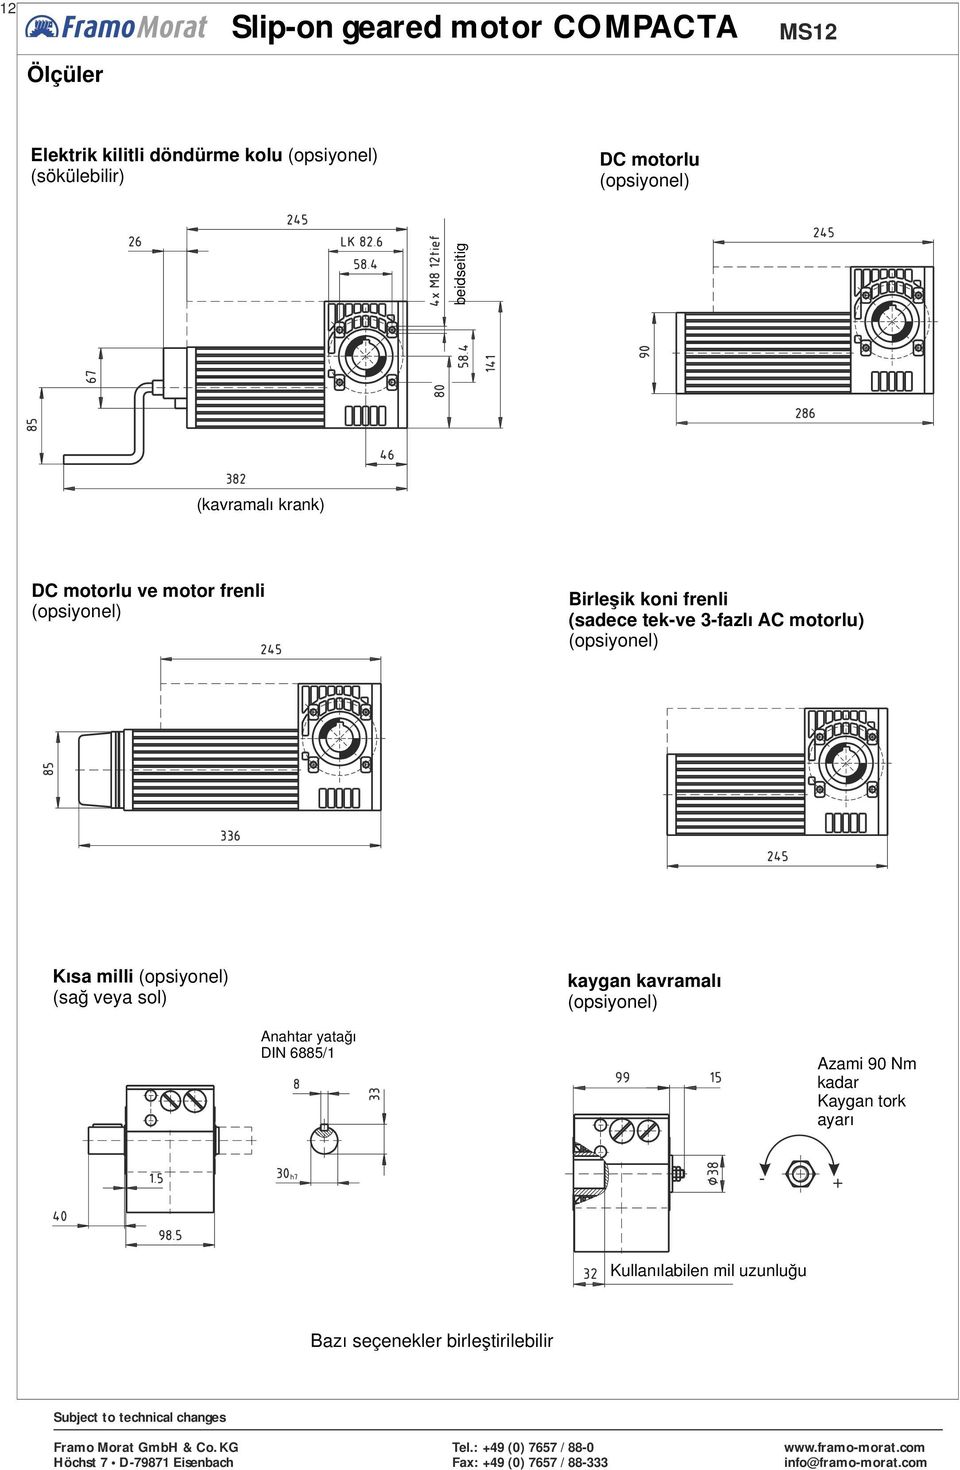 3-fazlı AC motorlu) (opsiyonel) Kısa milli (opsiyonel) (sağ veya sol) Anahtar yatağı DIN 6885/1 kaygan kavramalı